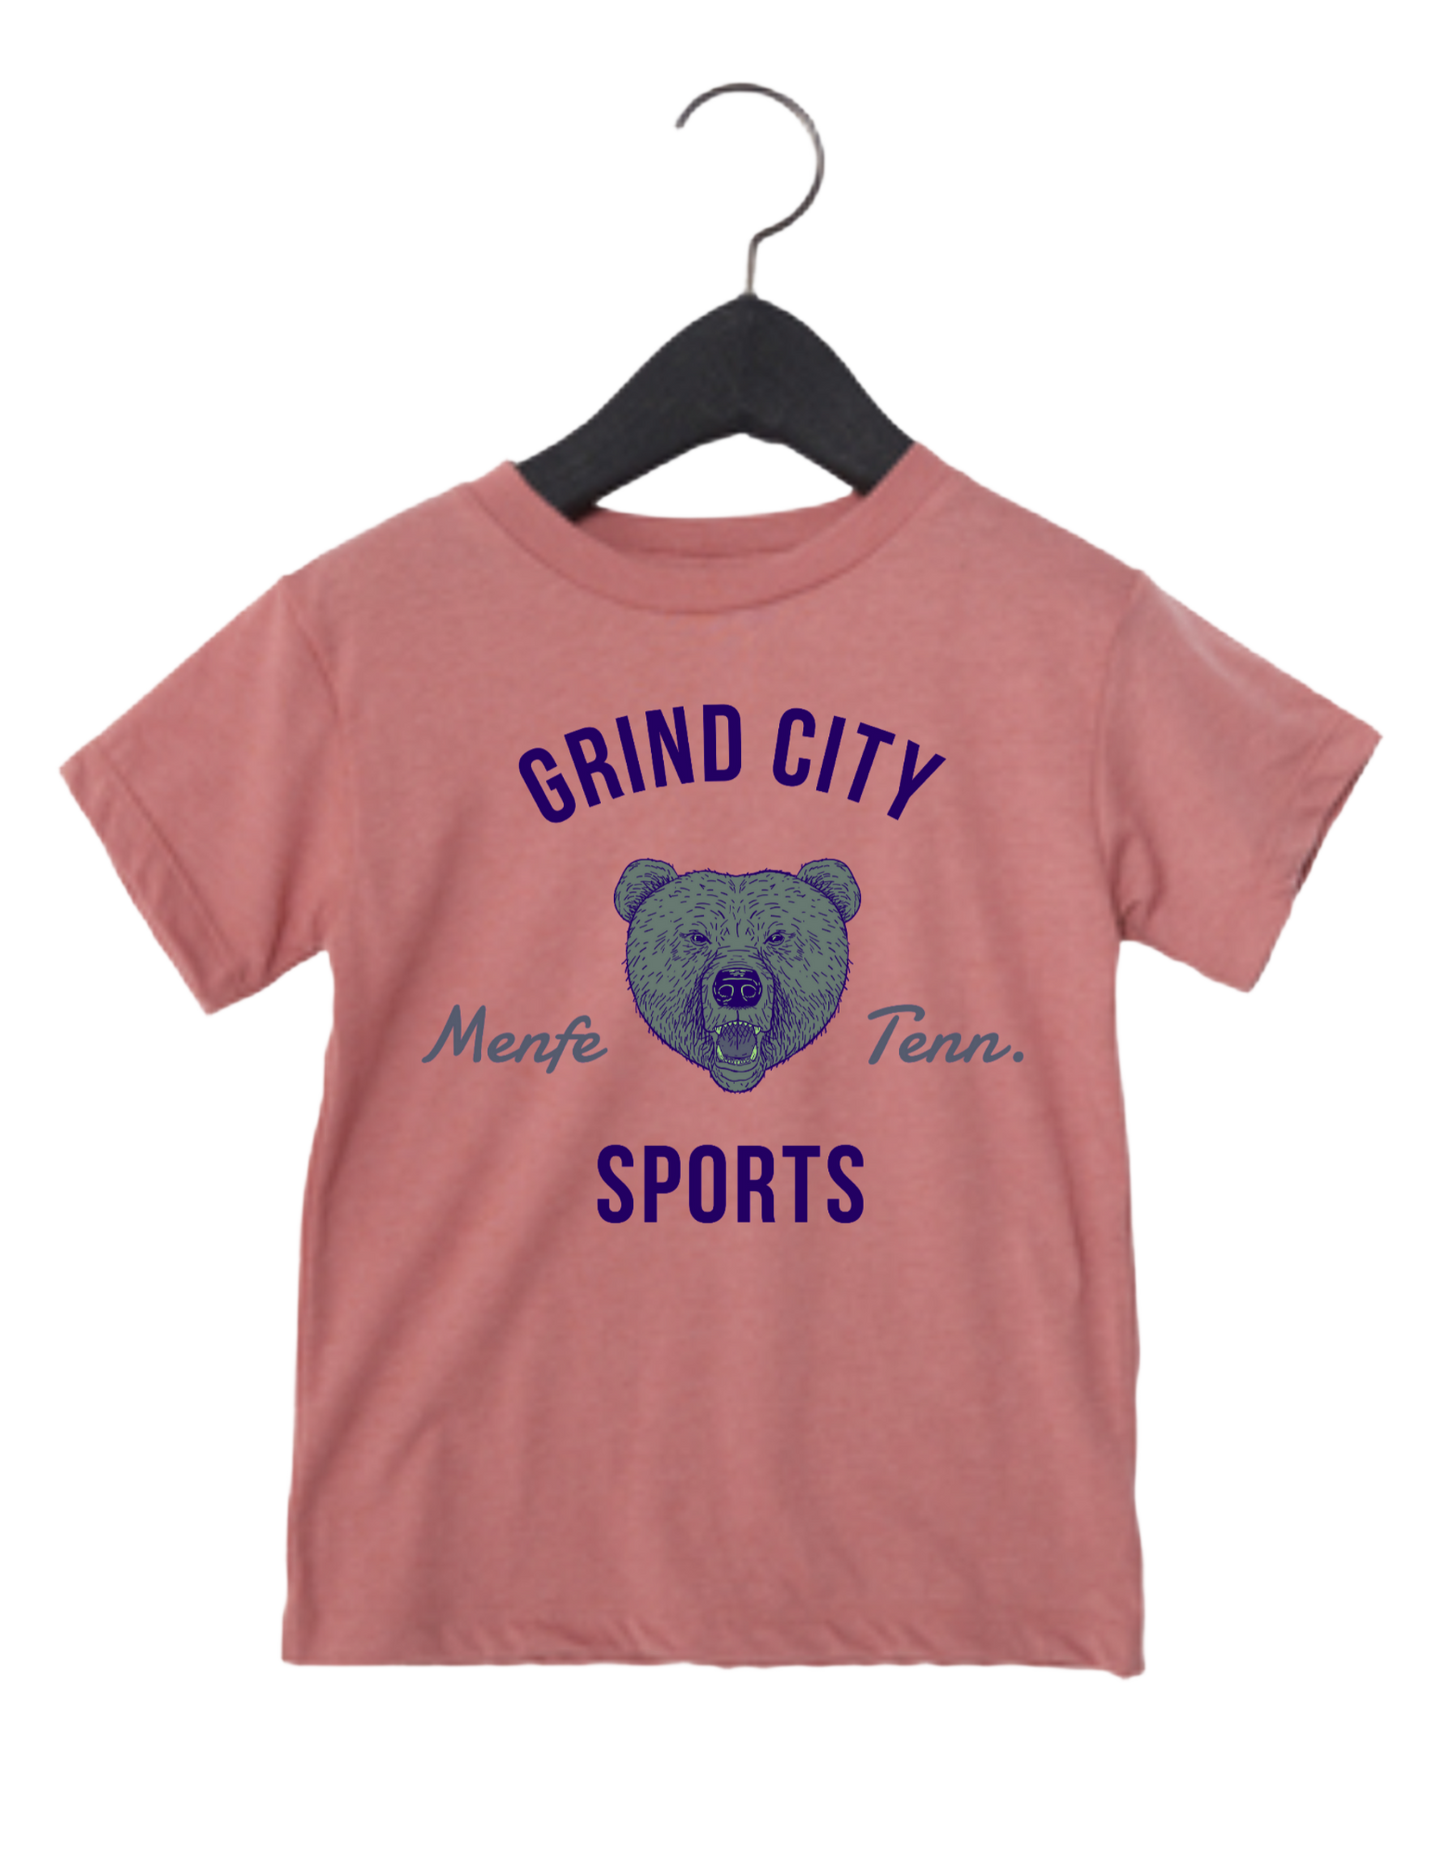 Grind City Sports Tee - Heather Mauve (Kids)